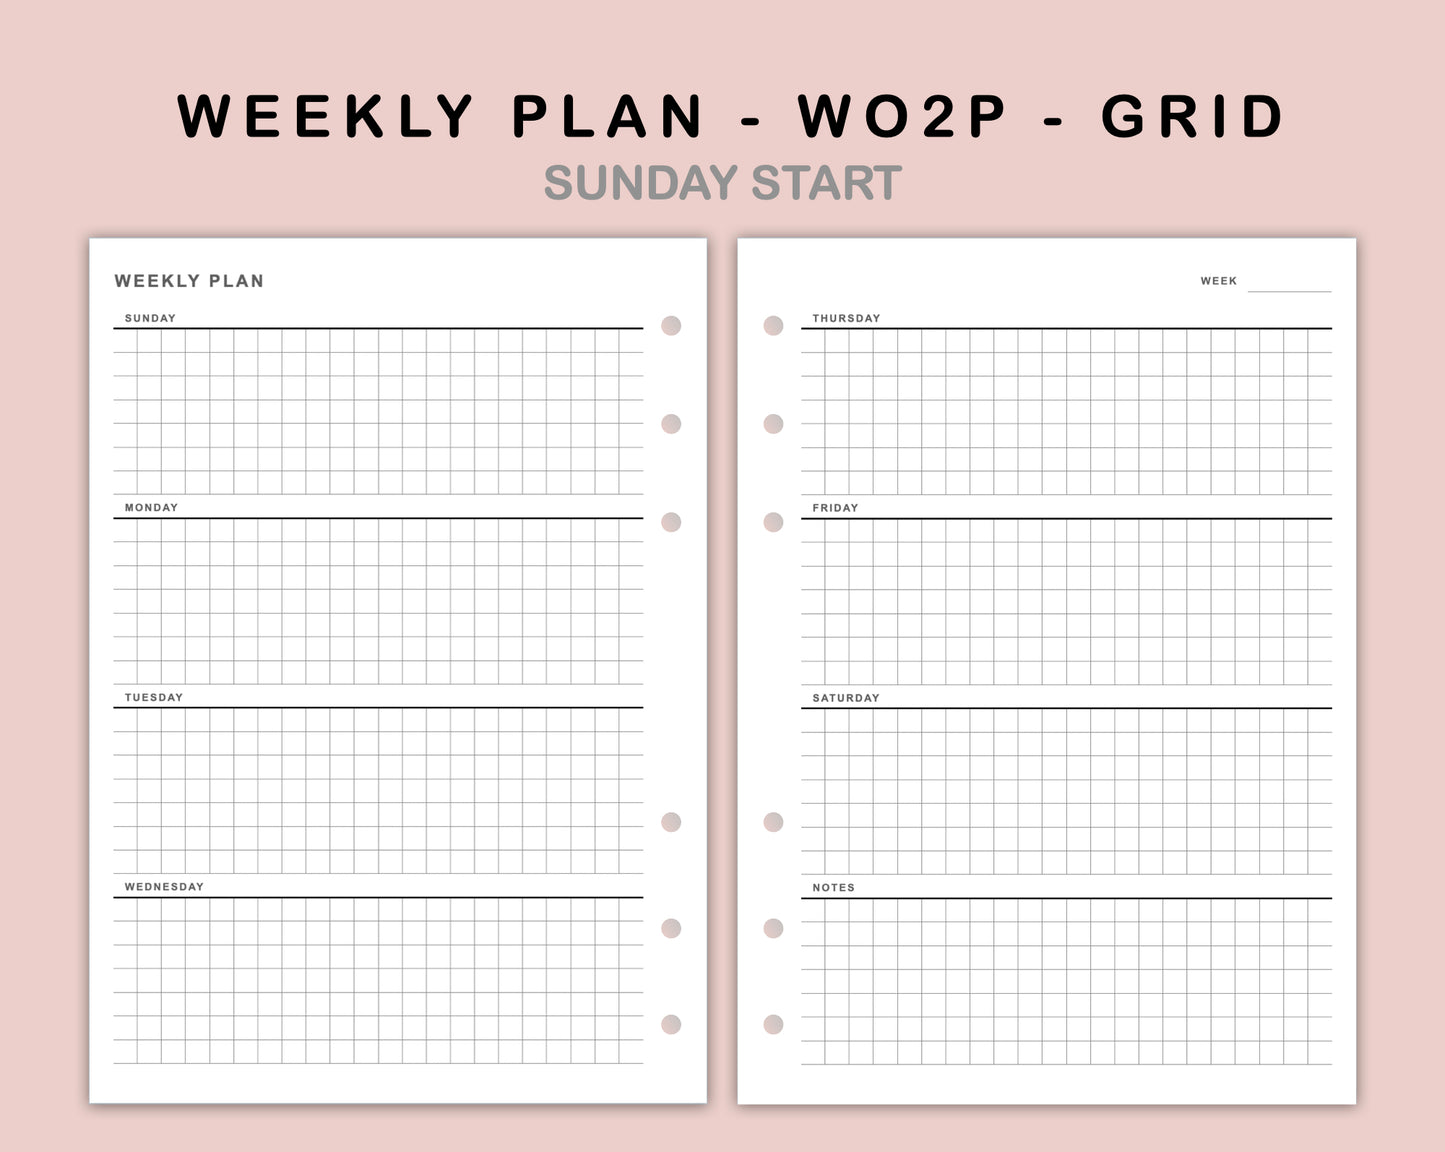 B6 Inserts - Weekly Plan - WO2P - Grid